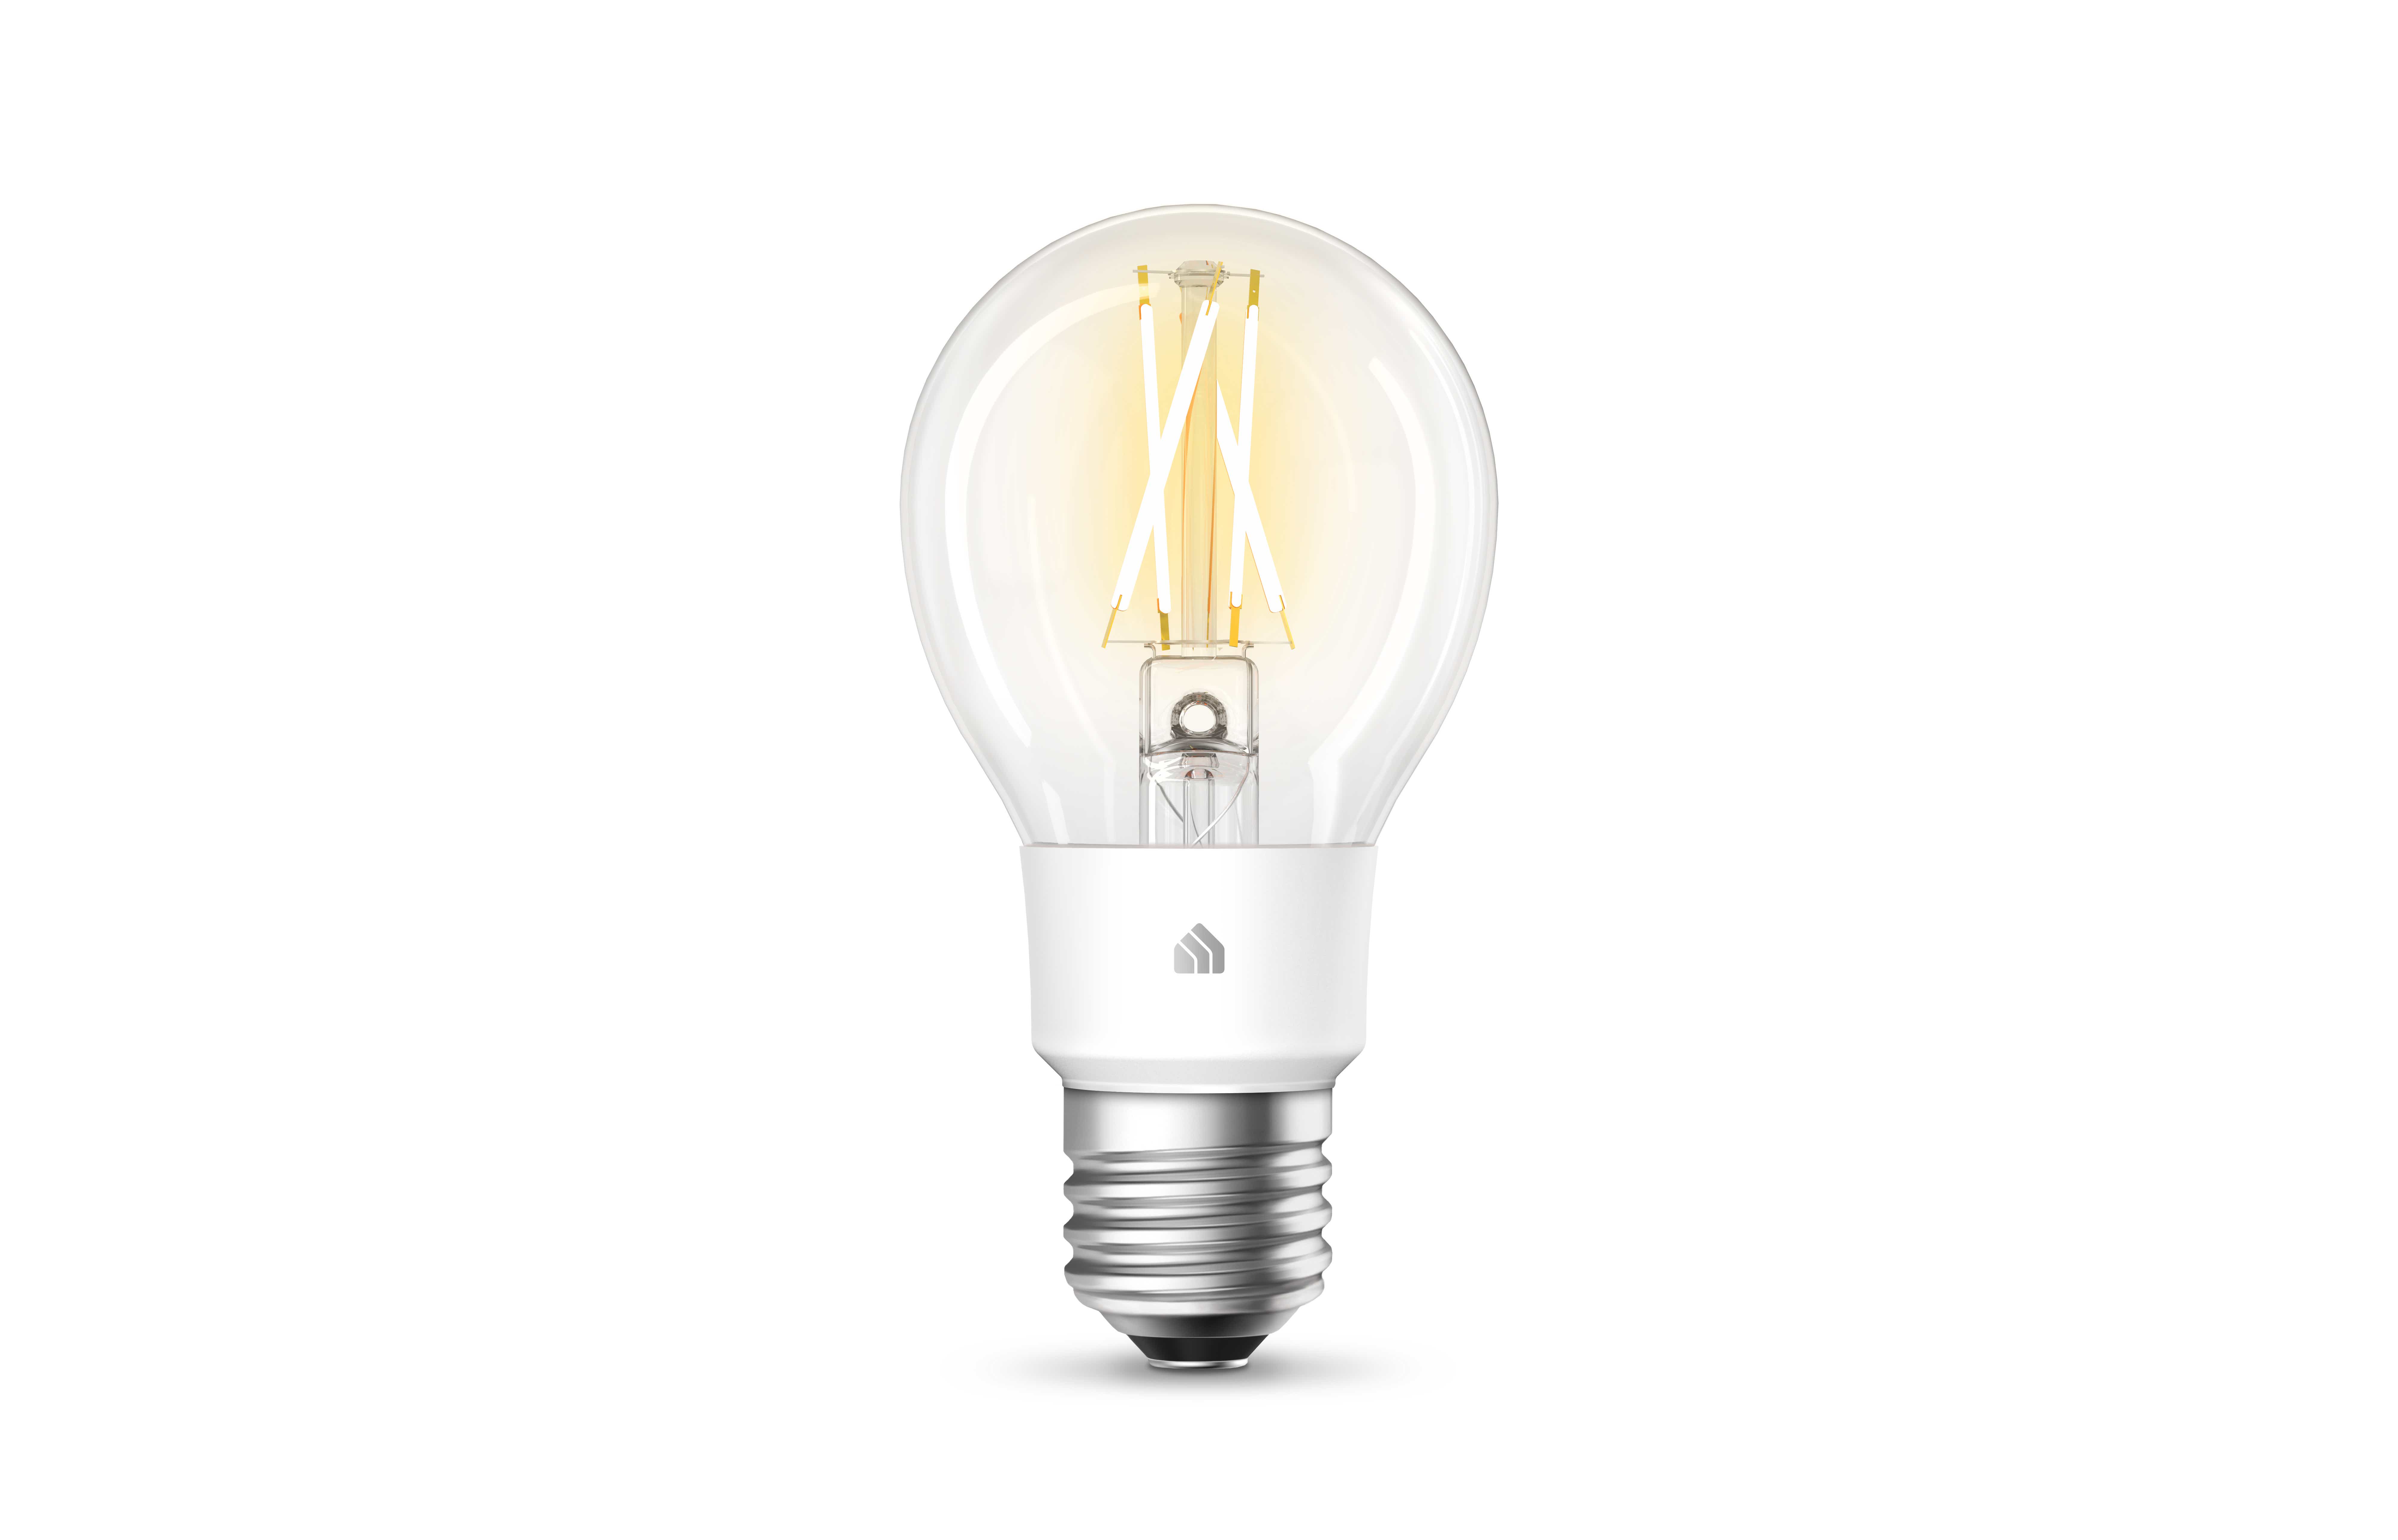 TP-Link Kasa Filament soft white smart bulb (Model KL50)